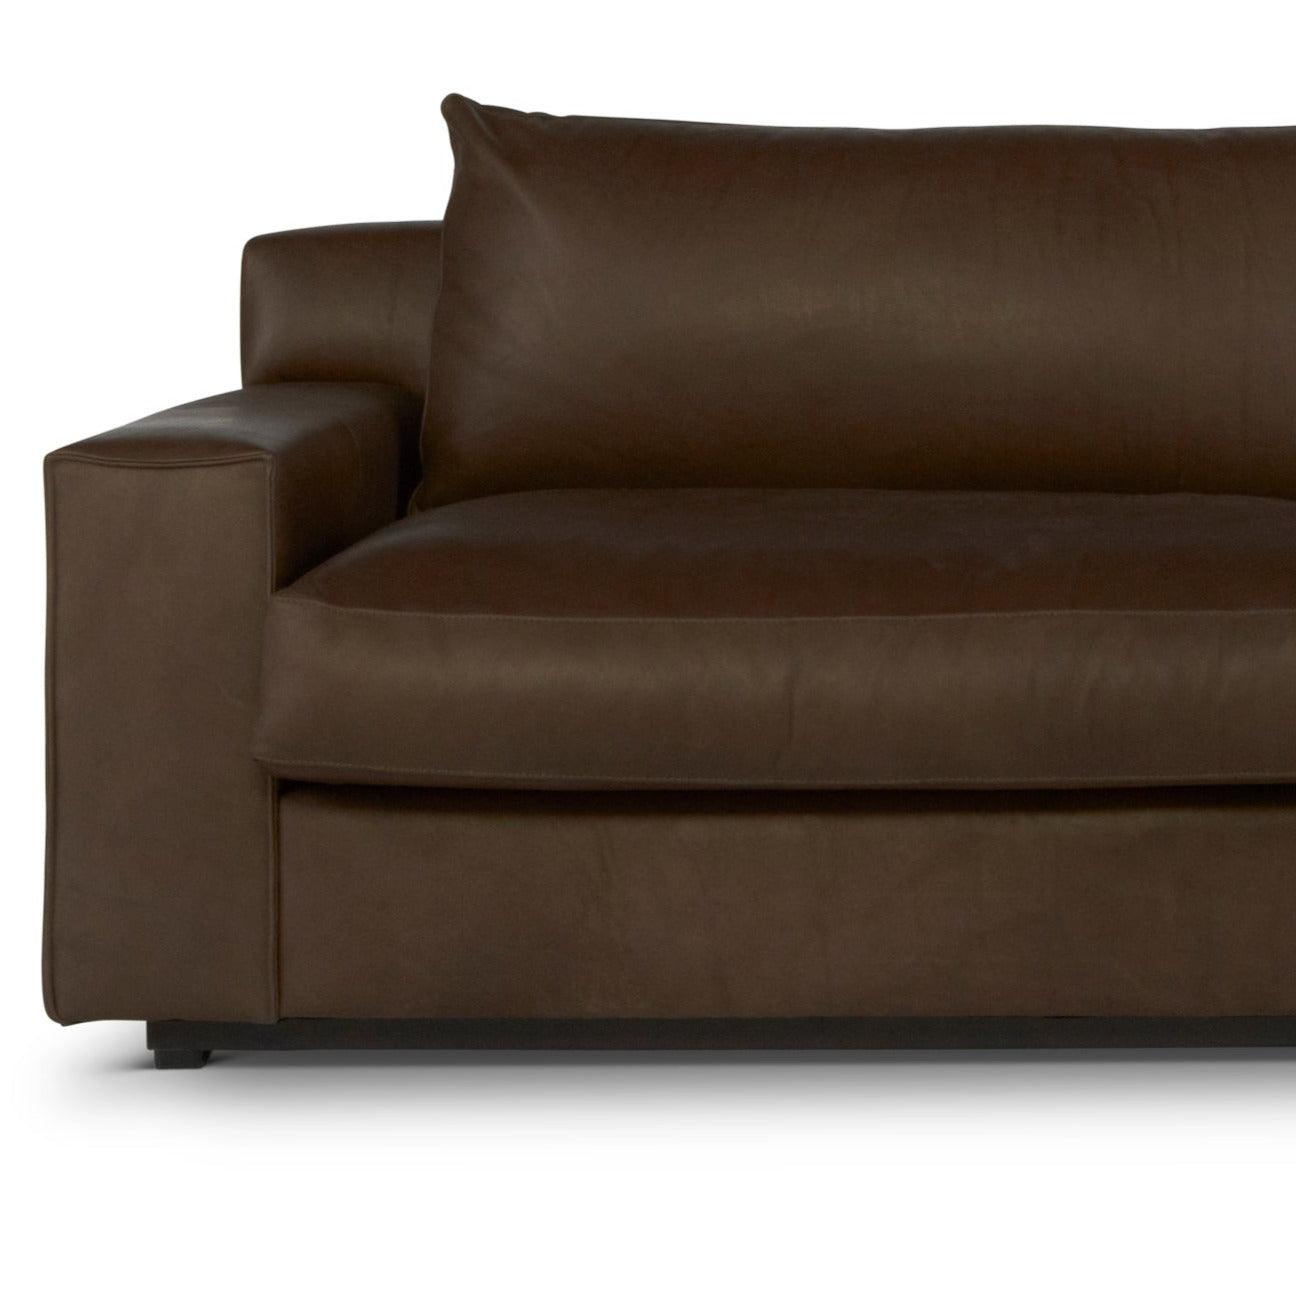 Barrett Ethical Custom Made 2 Cushion Leather Sofa - Uptown Sebastian